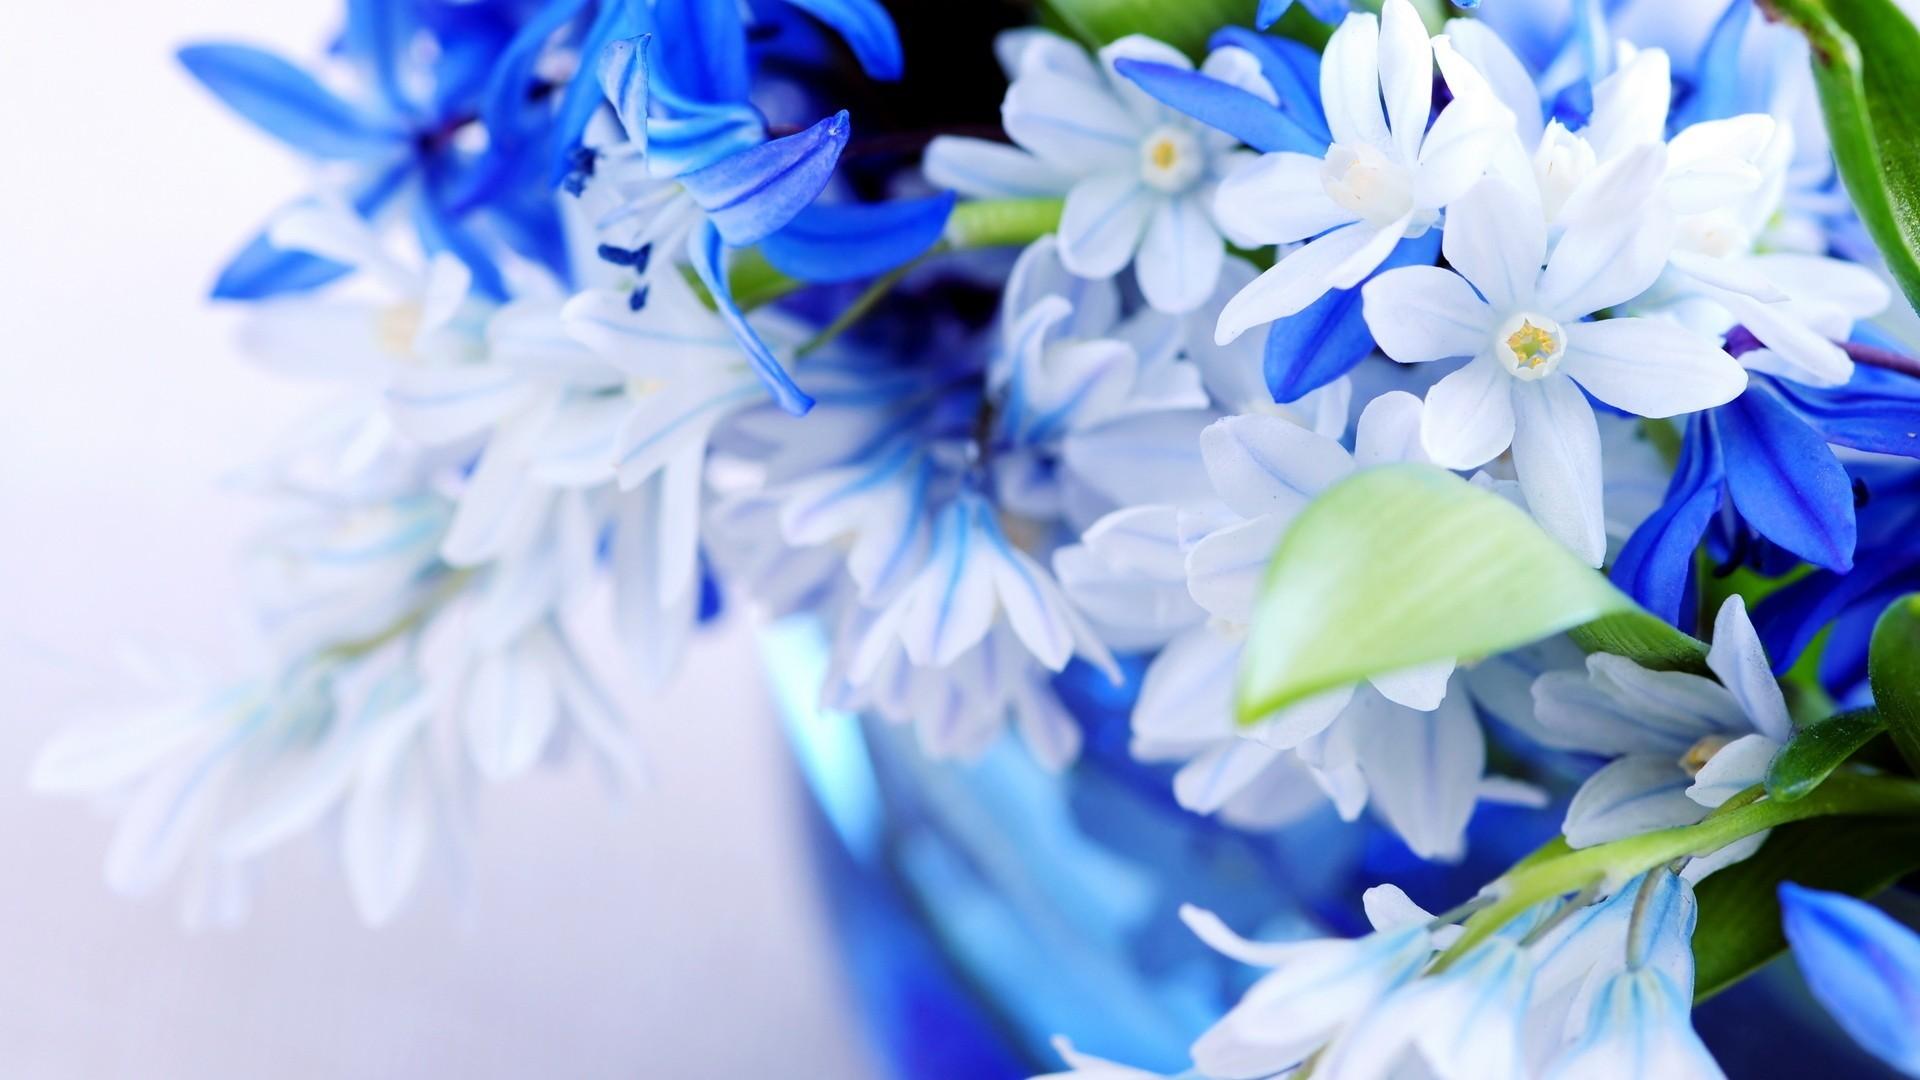 Marvelous blue flowers wallpaper. PC